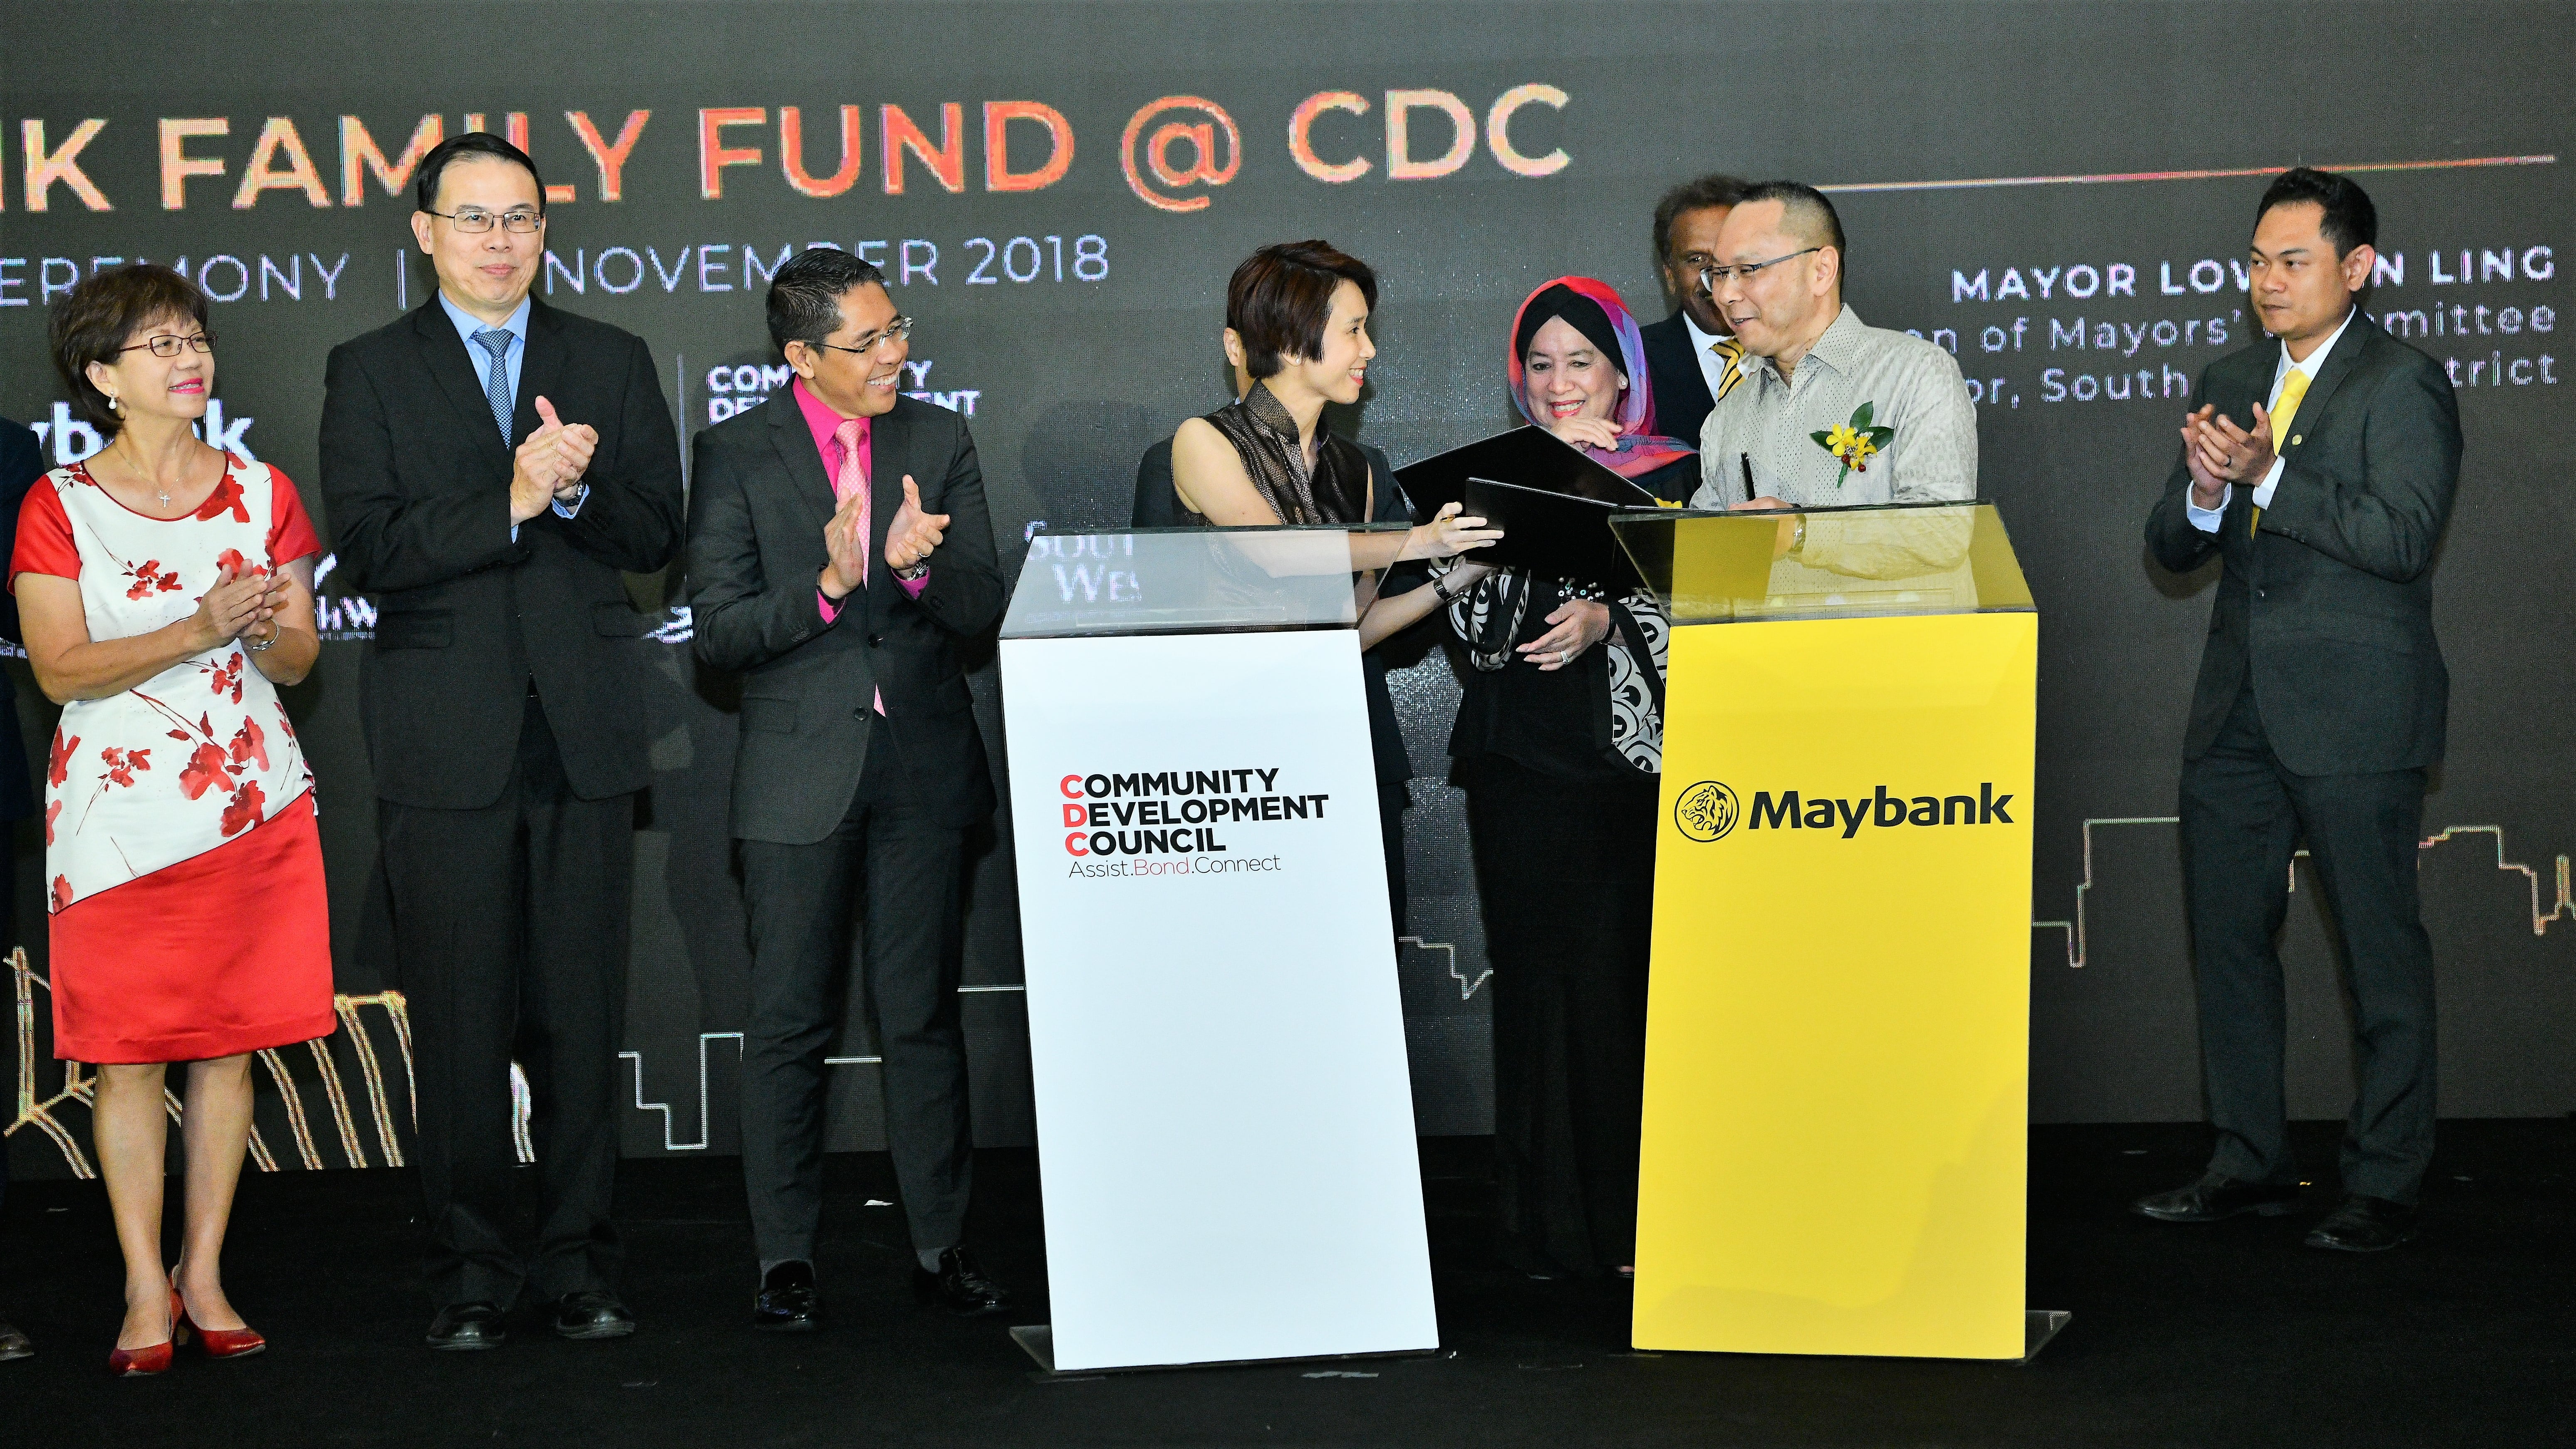  Maybank Family Fund@CDC 2018